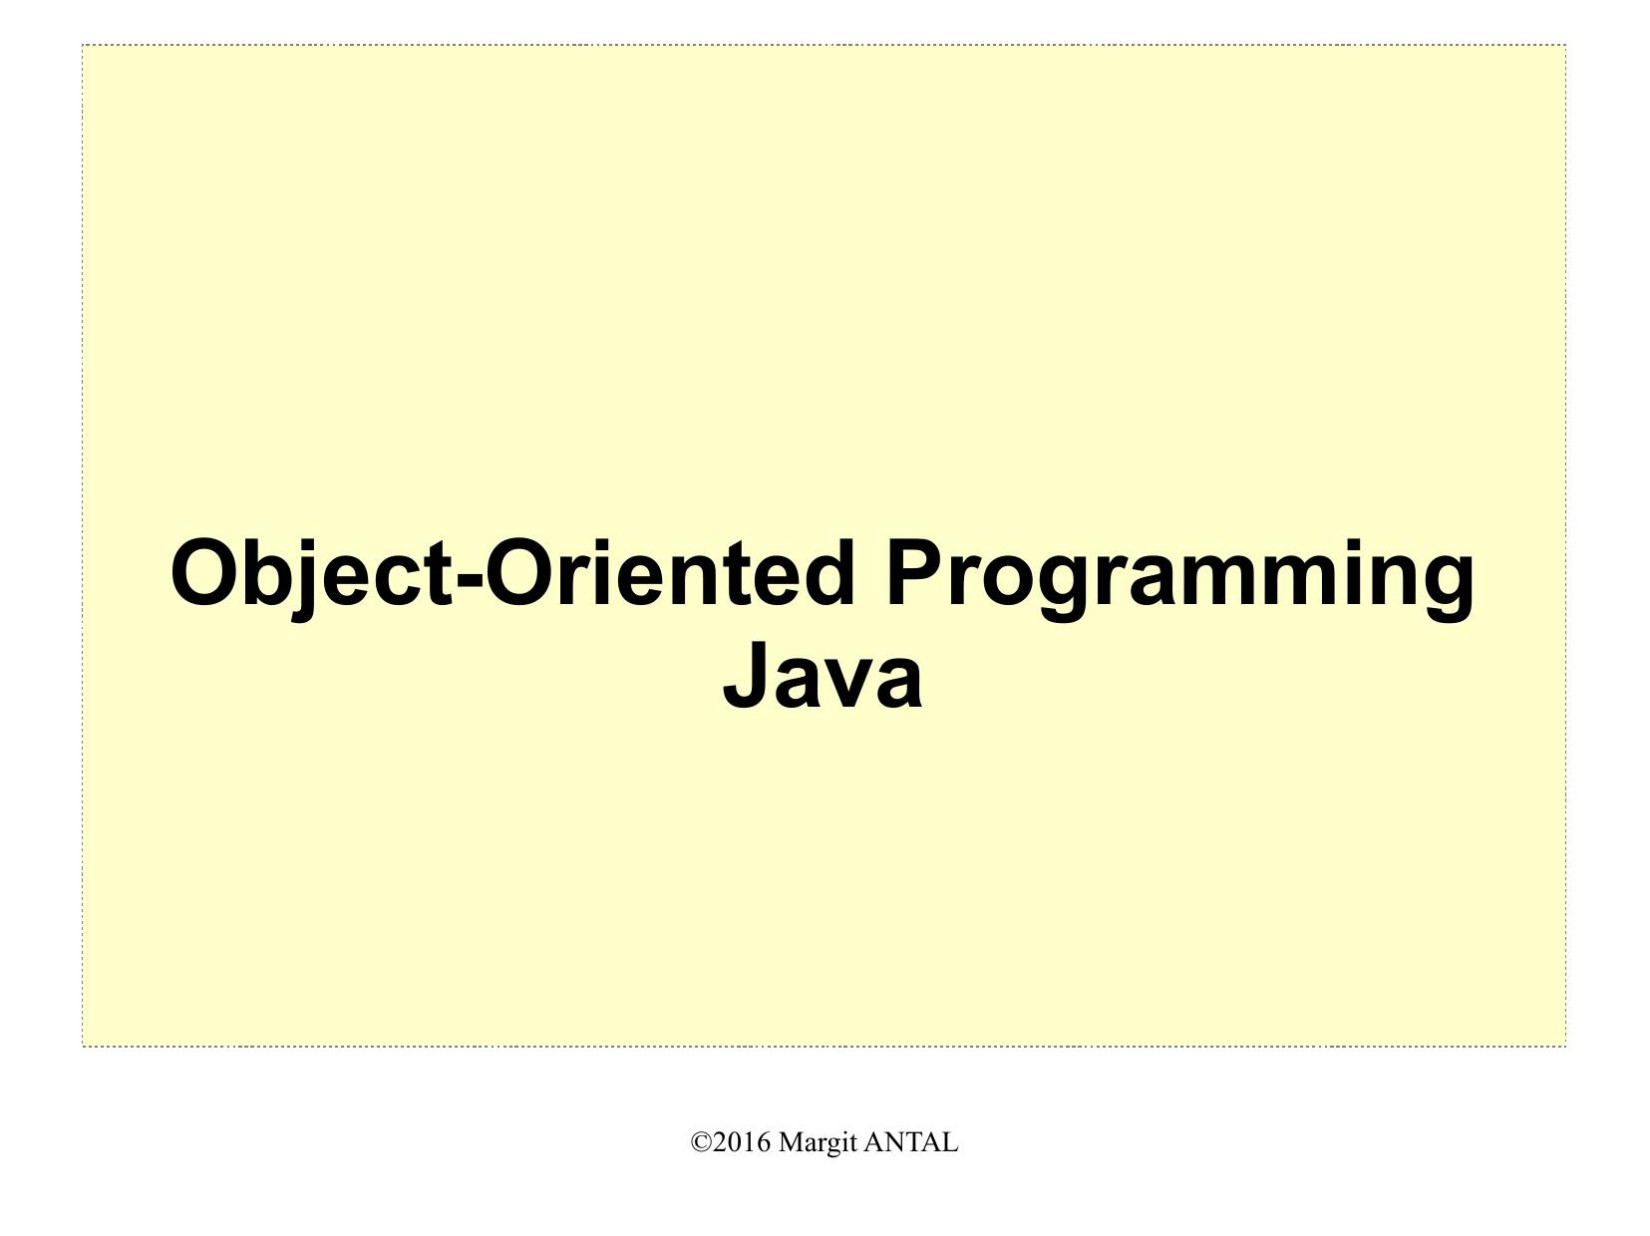 Object-Oriented Programming java 2016